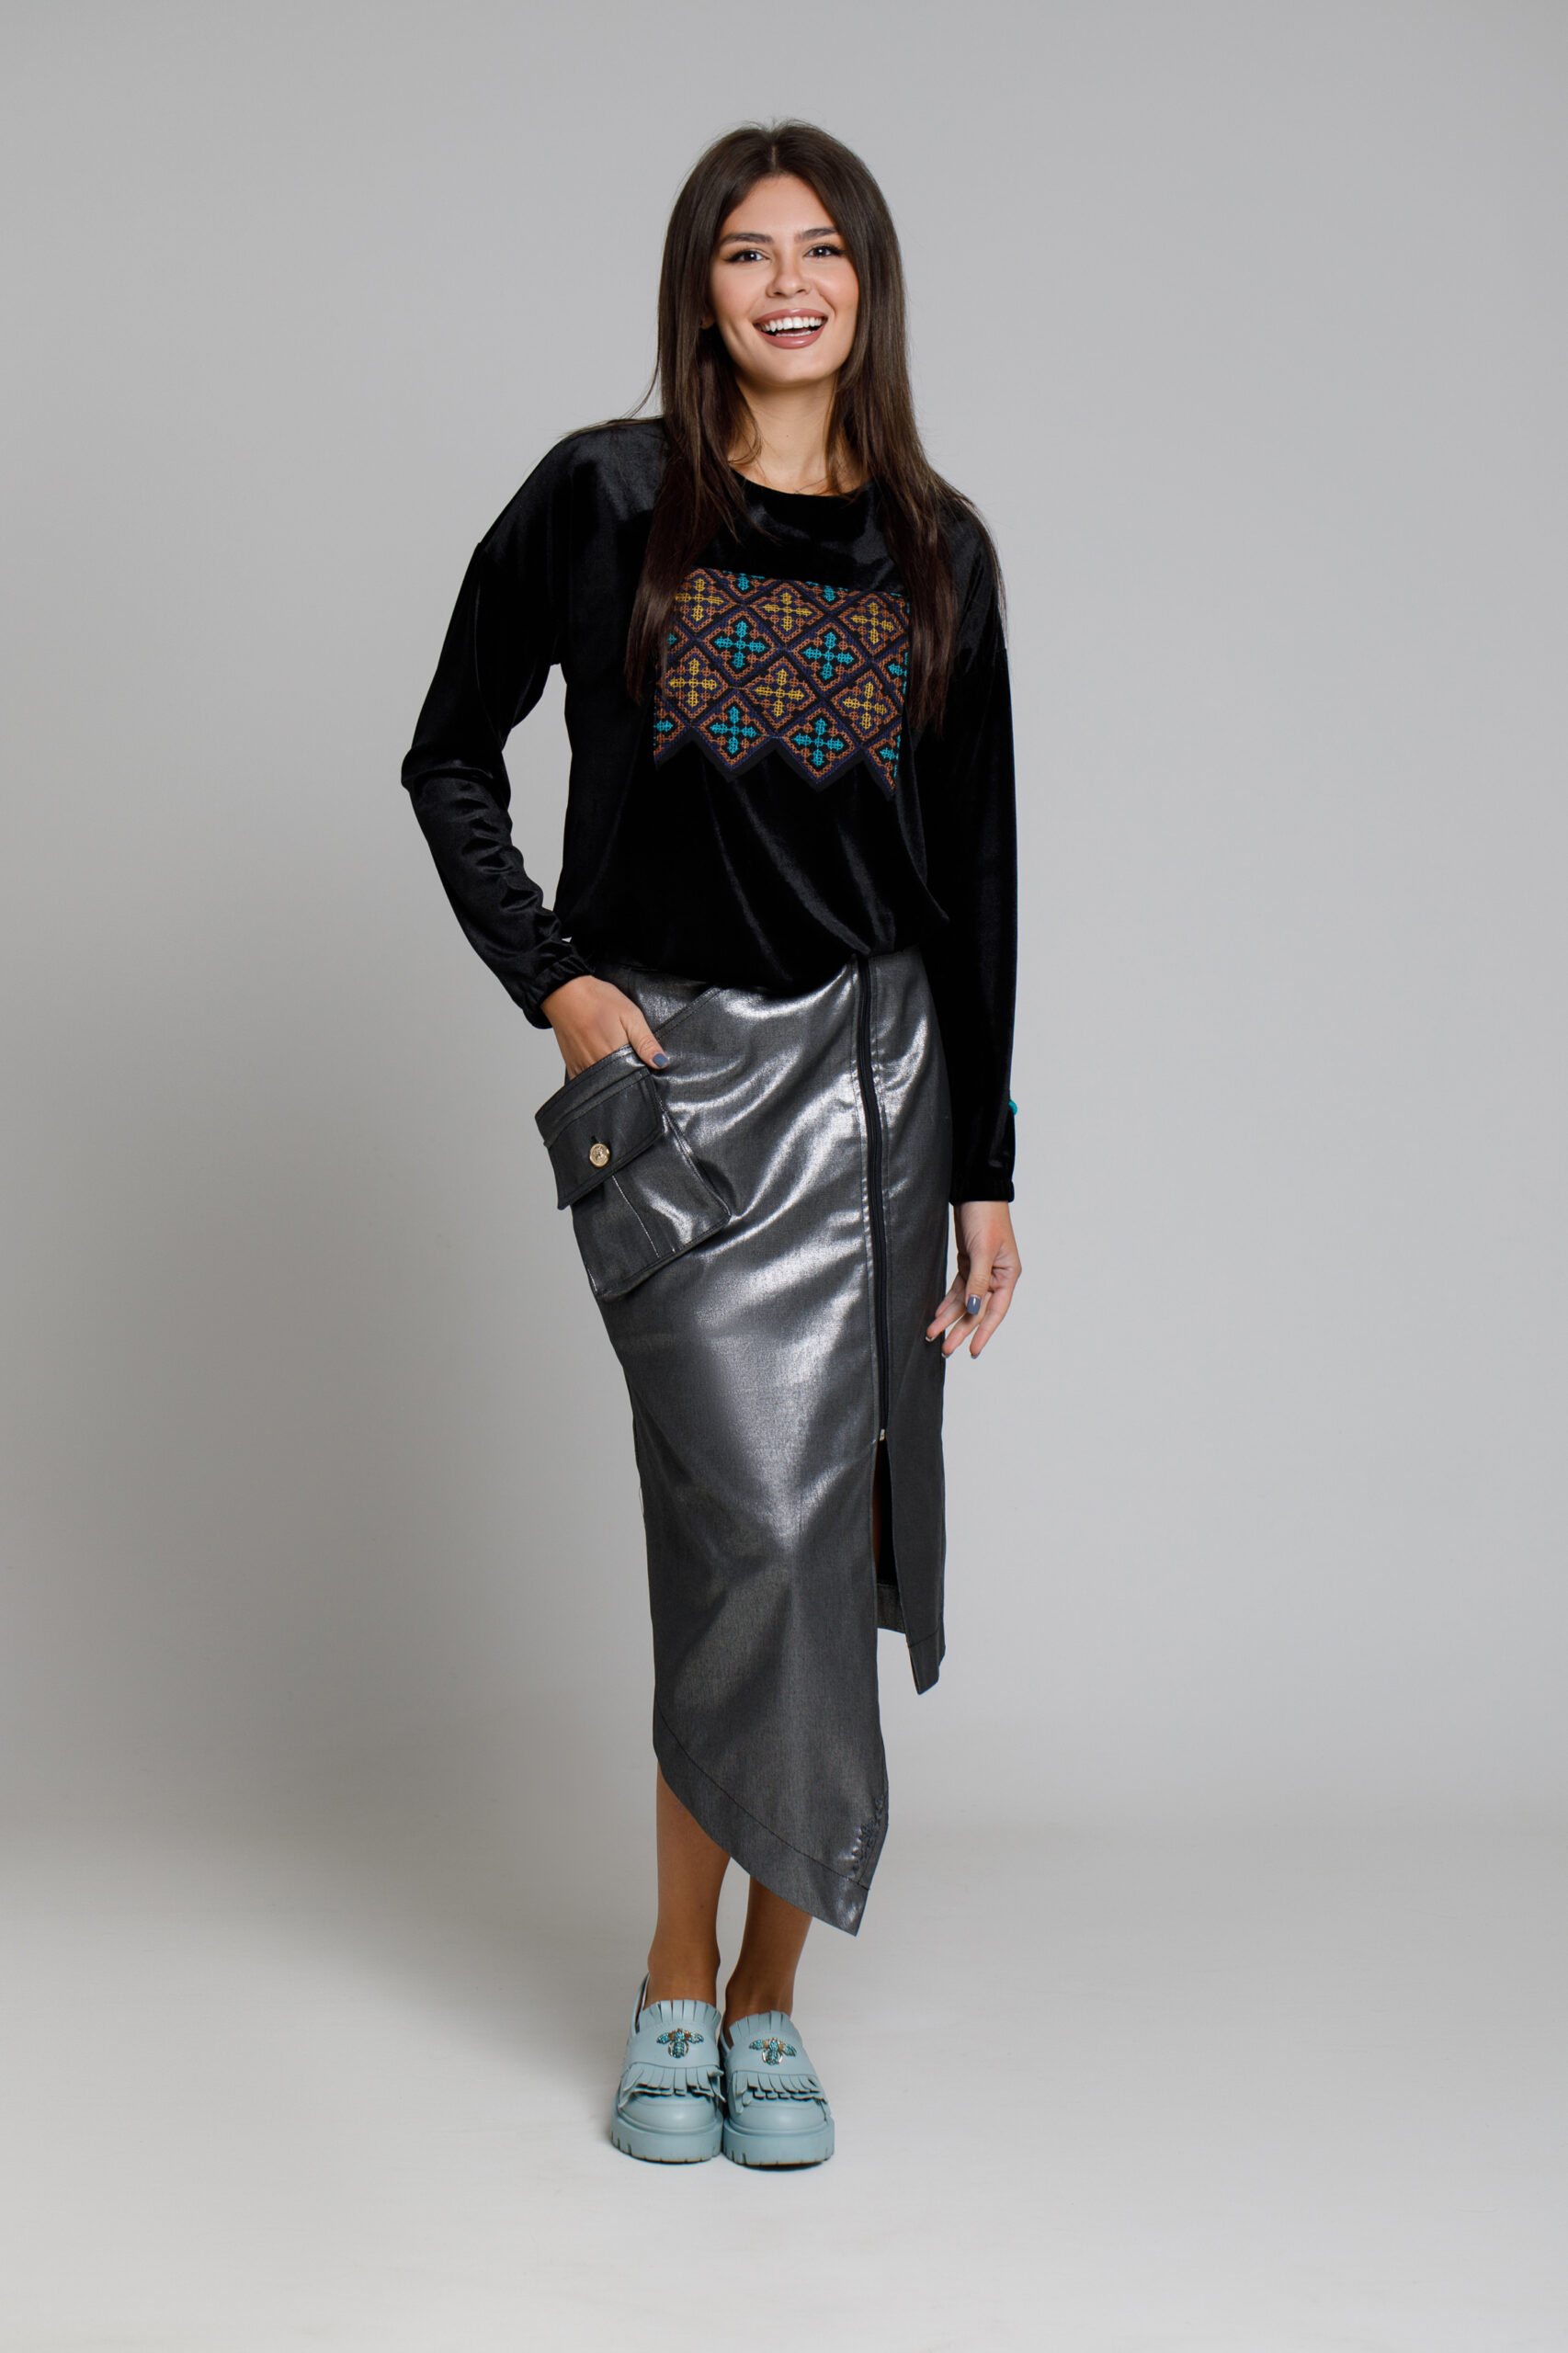 KENNY Skirt silver. Natural fabrics, original design, handmade embroidery